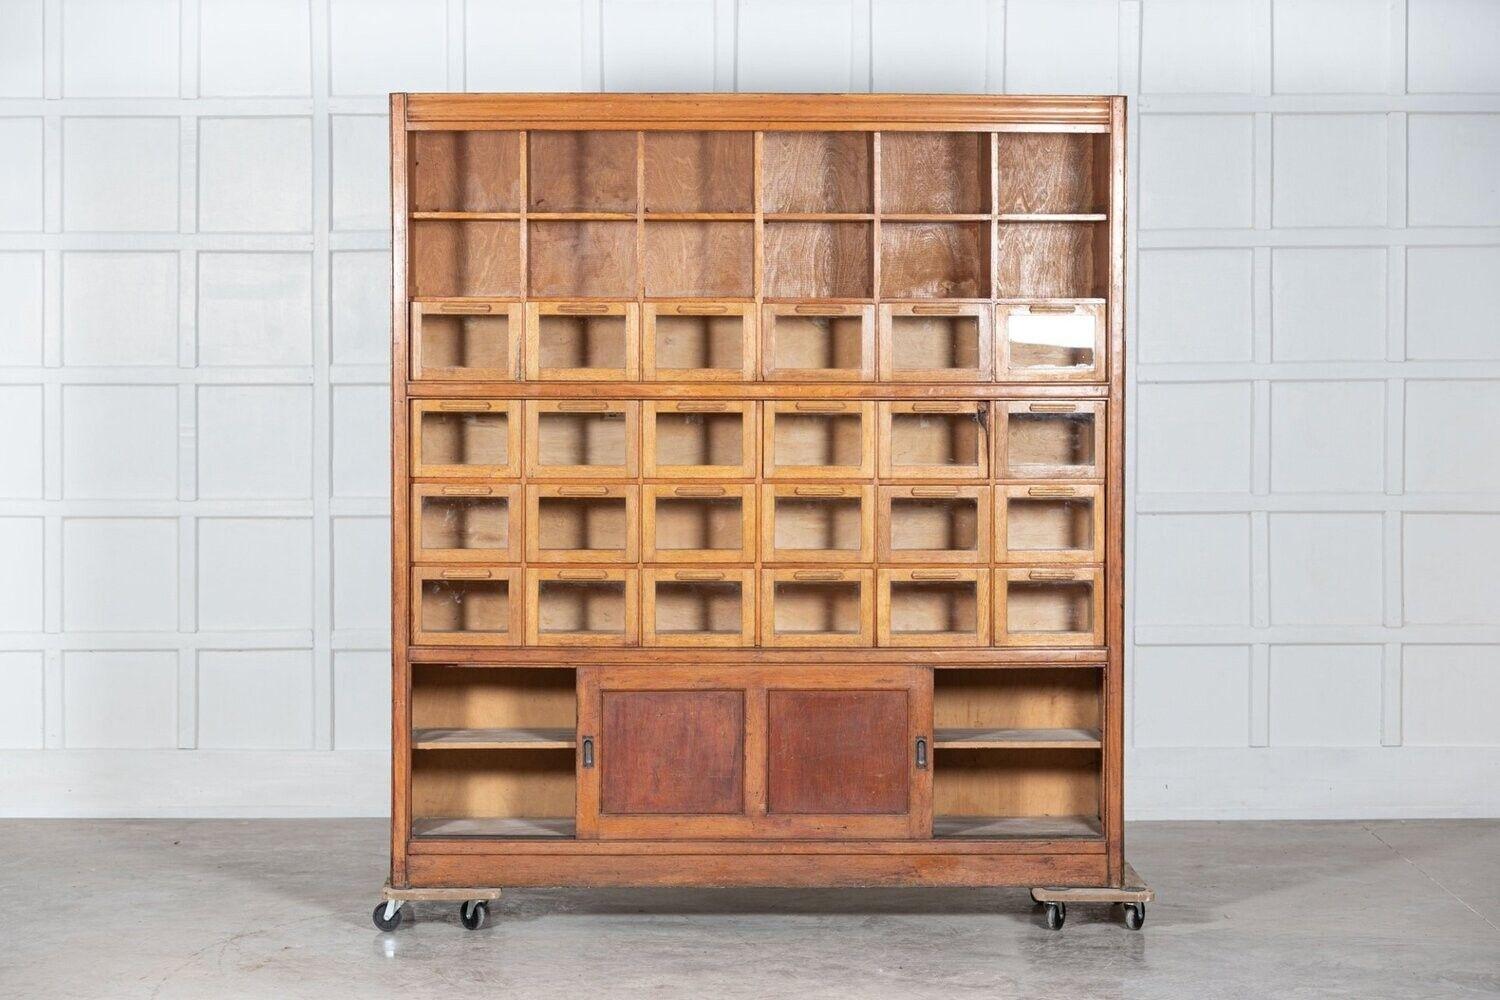 circa 1930
Large Oak Haberdashery Cabinet

Measures: W183 x D43 x H198.